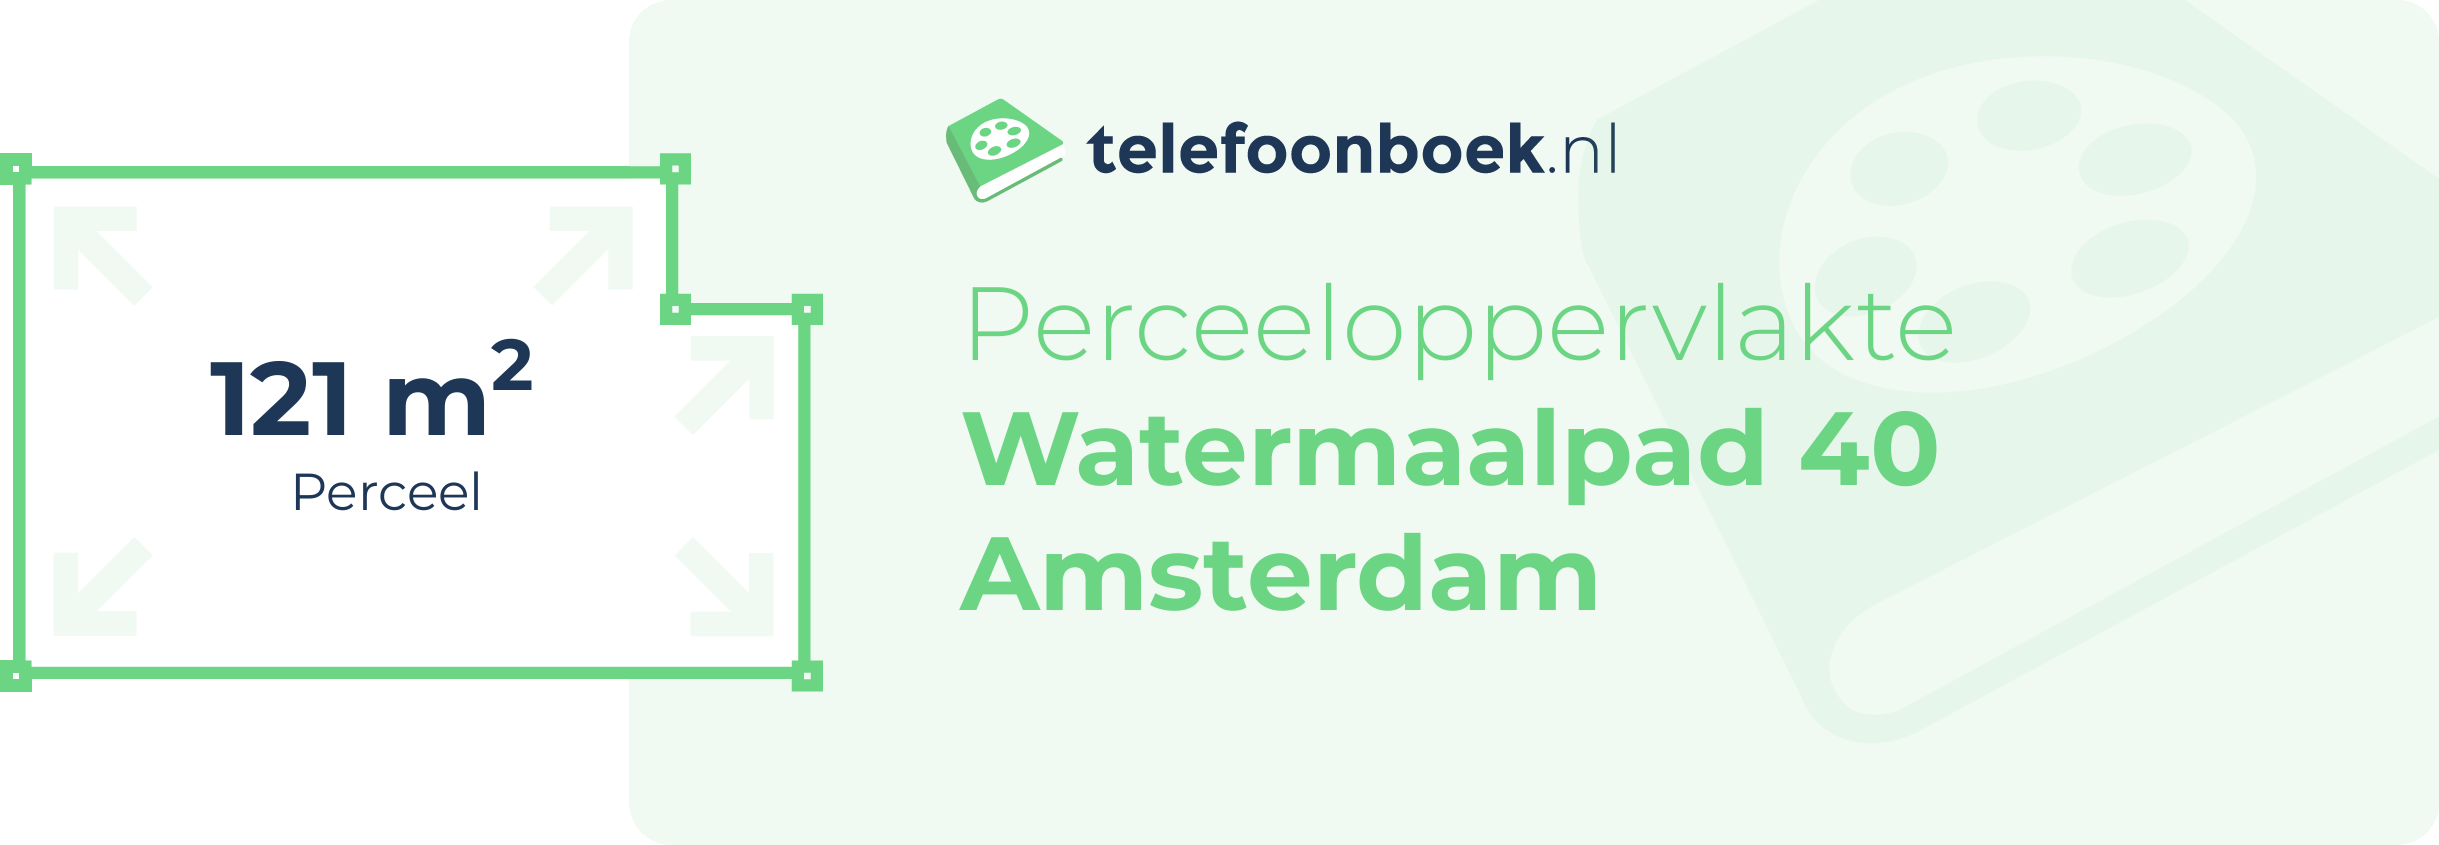 Perceeloppervlakte Watermaalpad 40 Amsterdam